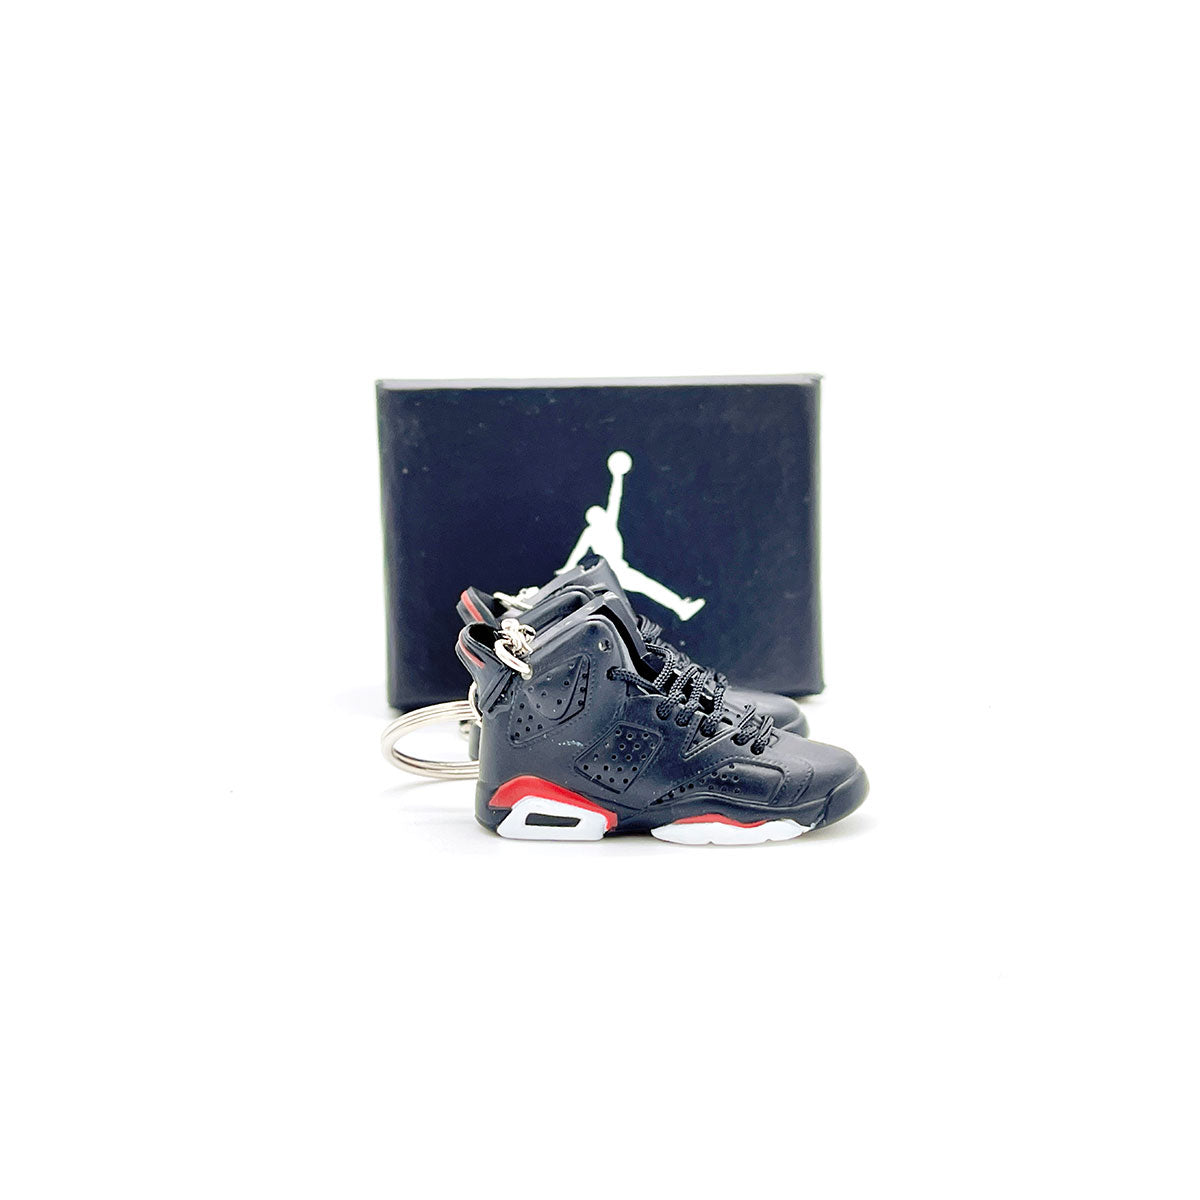 3D Sneaker Keychain- Air Jordan 6 Black Infrared Pair - KickzStore